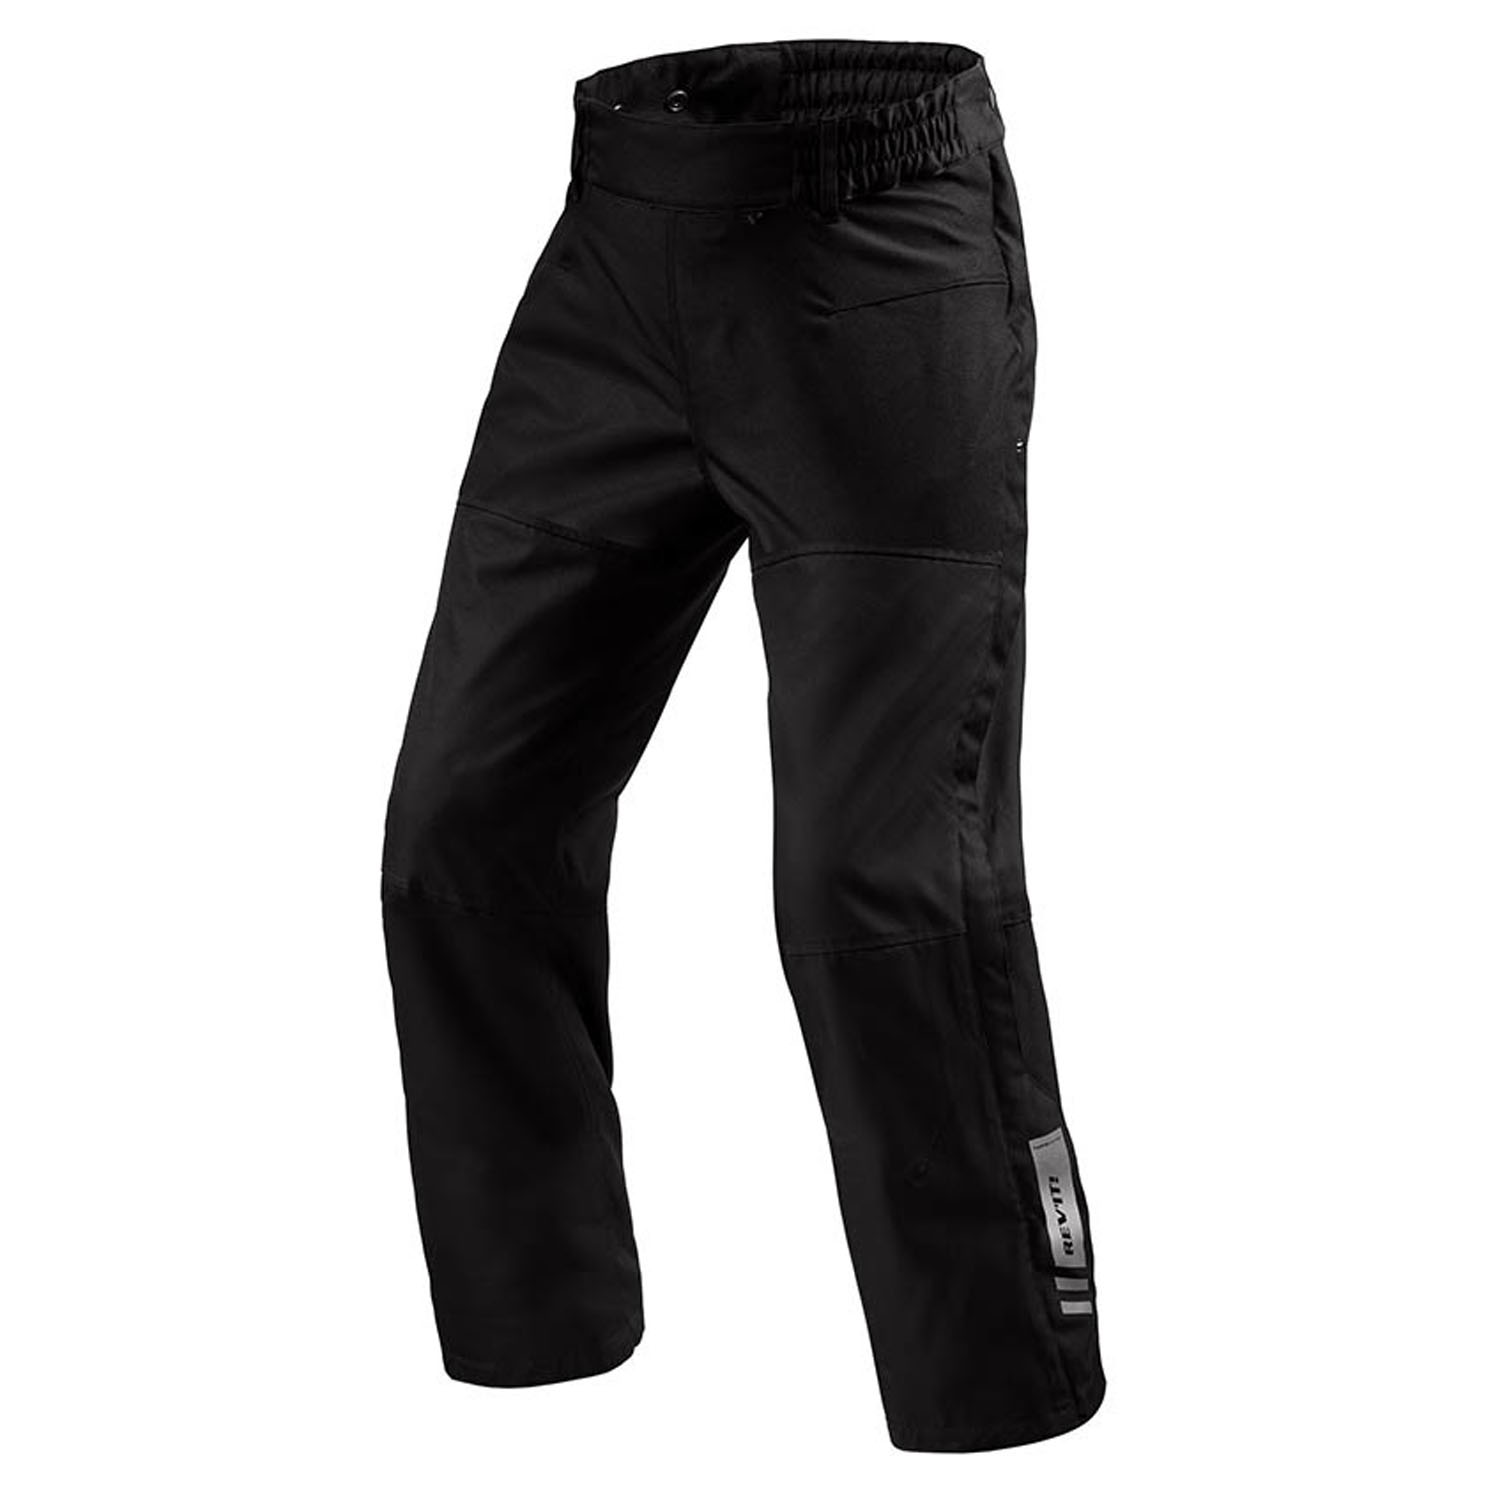 Image of REV'IT! Pants Axis 2 H2O Black Long Motorcycle Pants Size 2XL EN